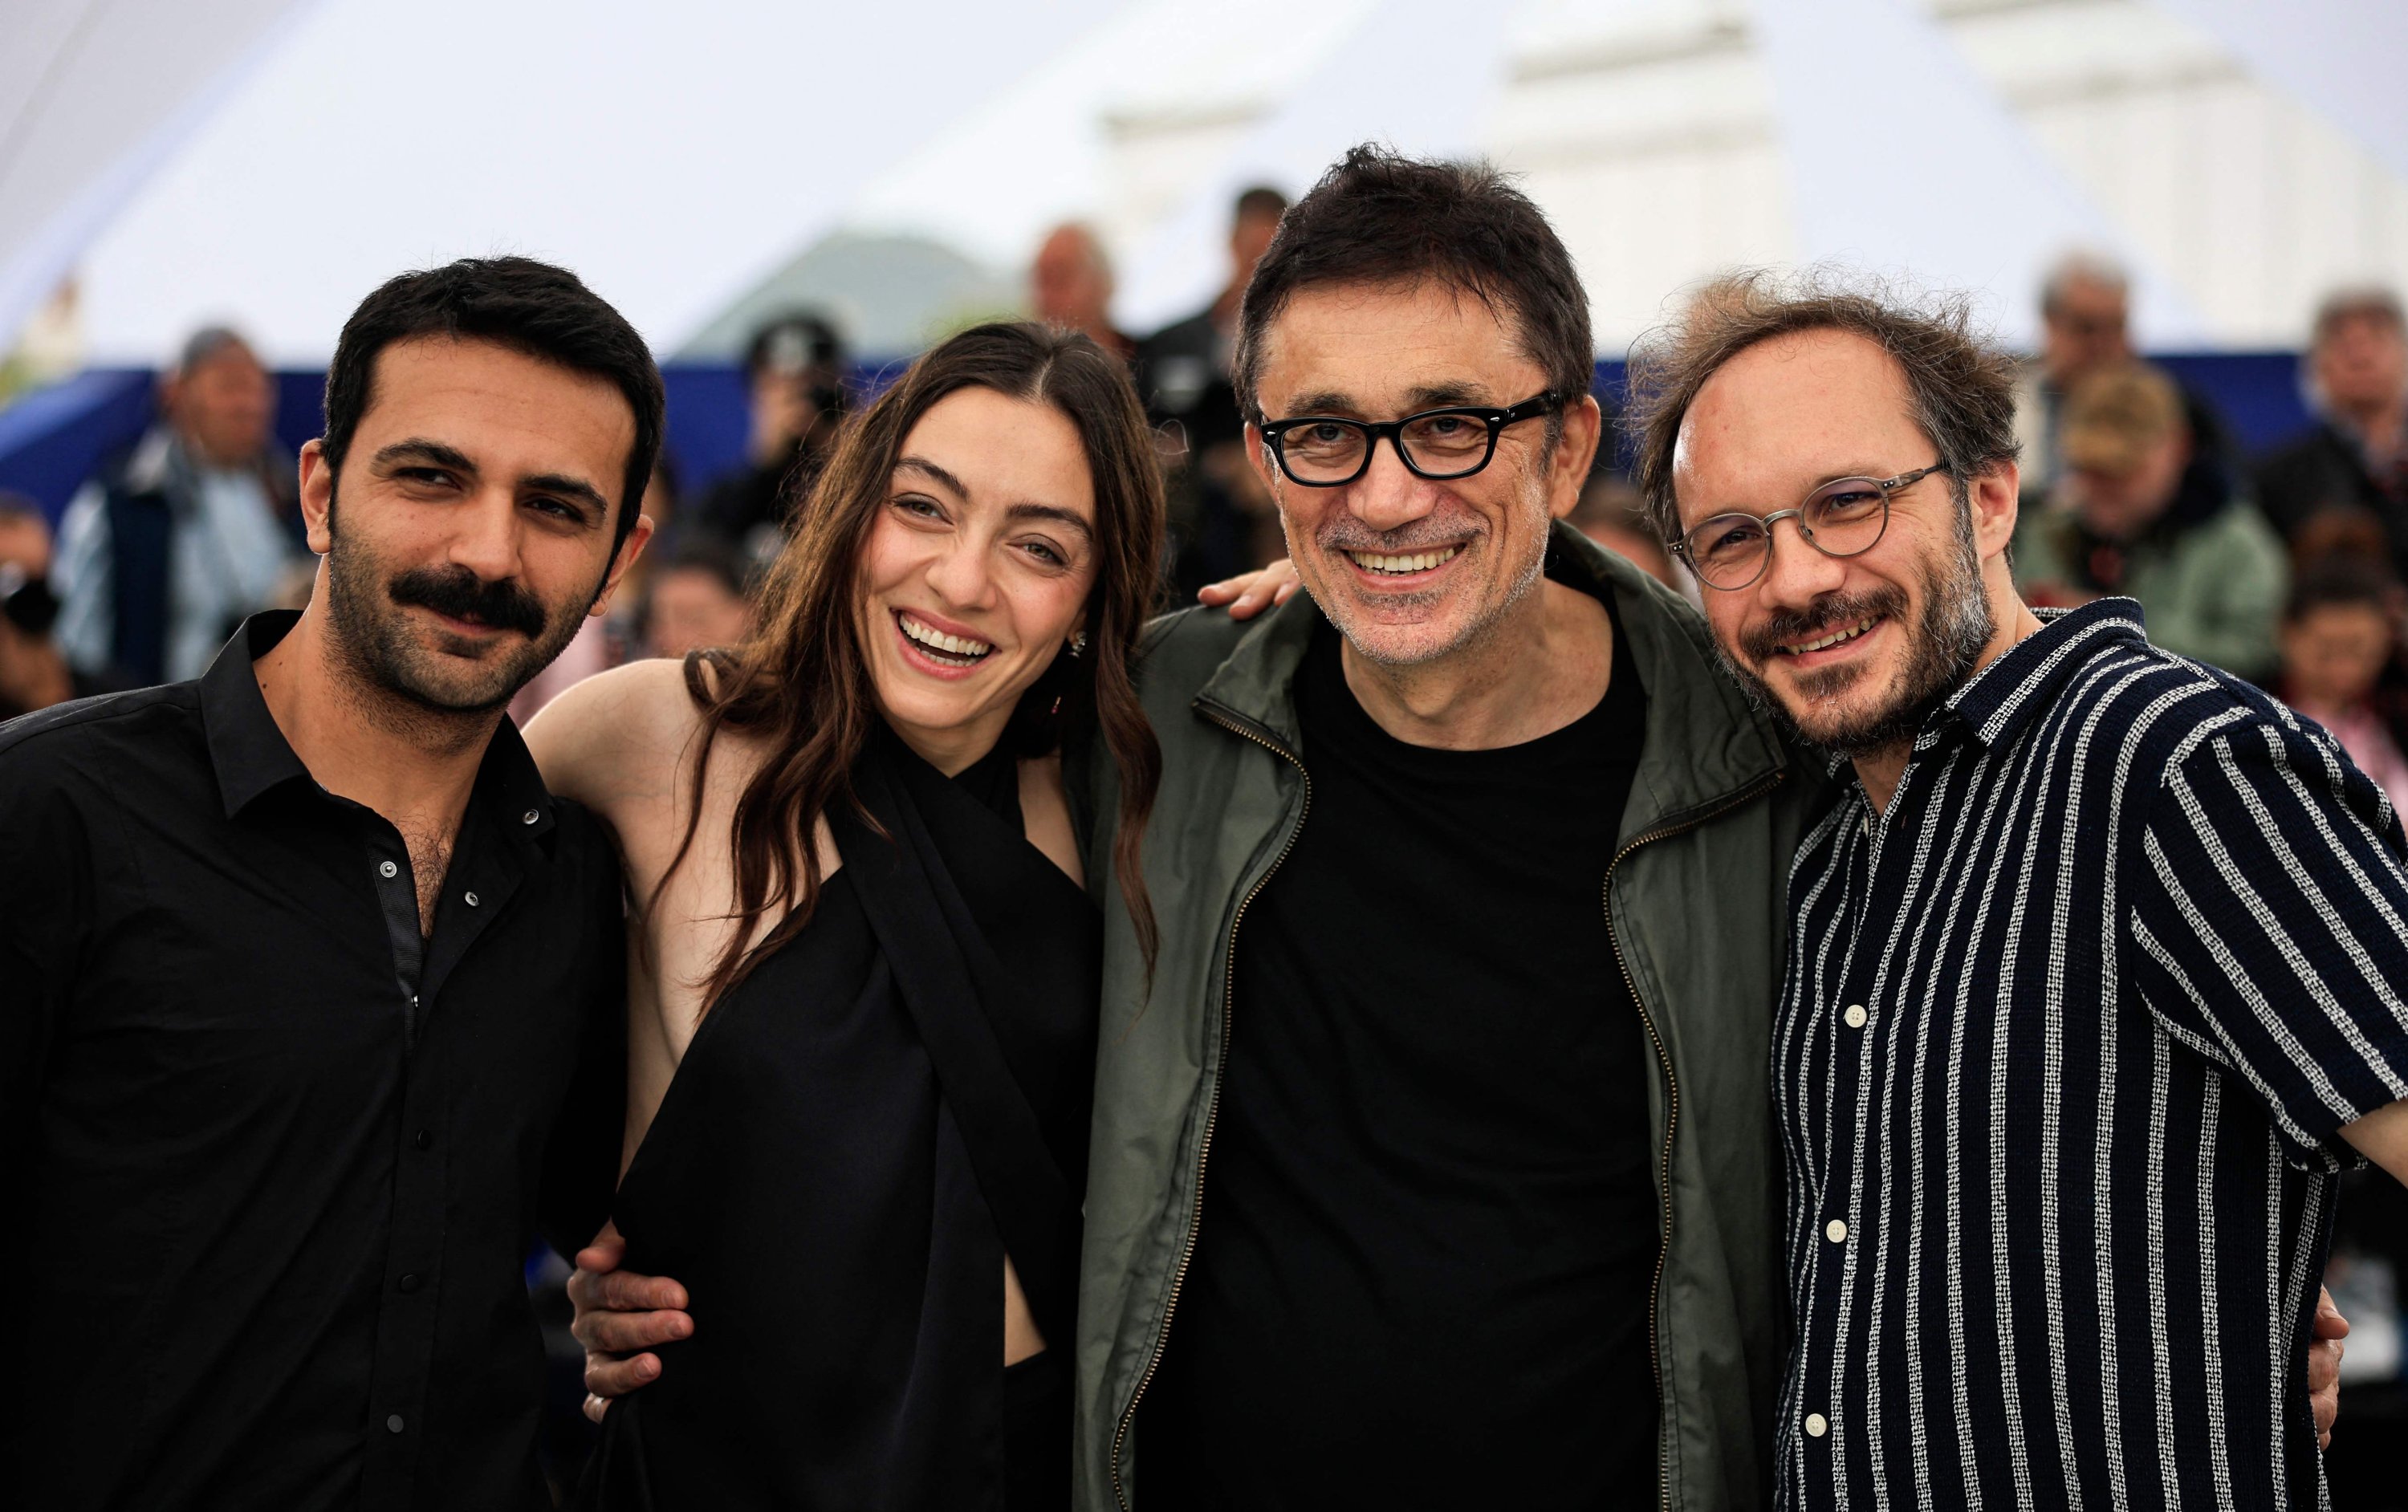 Turkish director Nuri Bilge Ceylan gets thunderous applause at Cannes